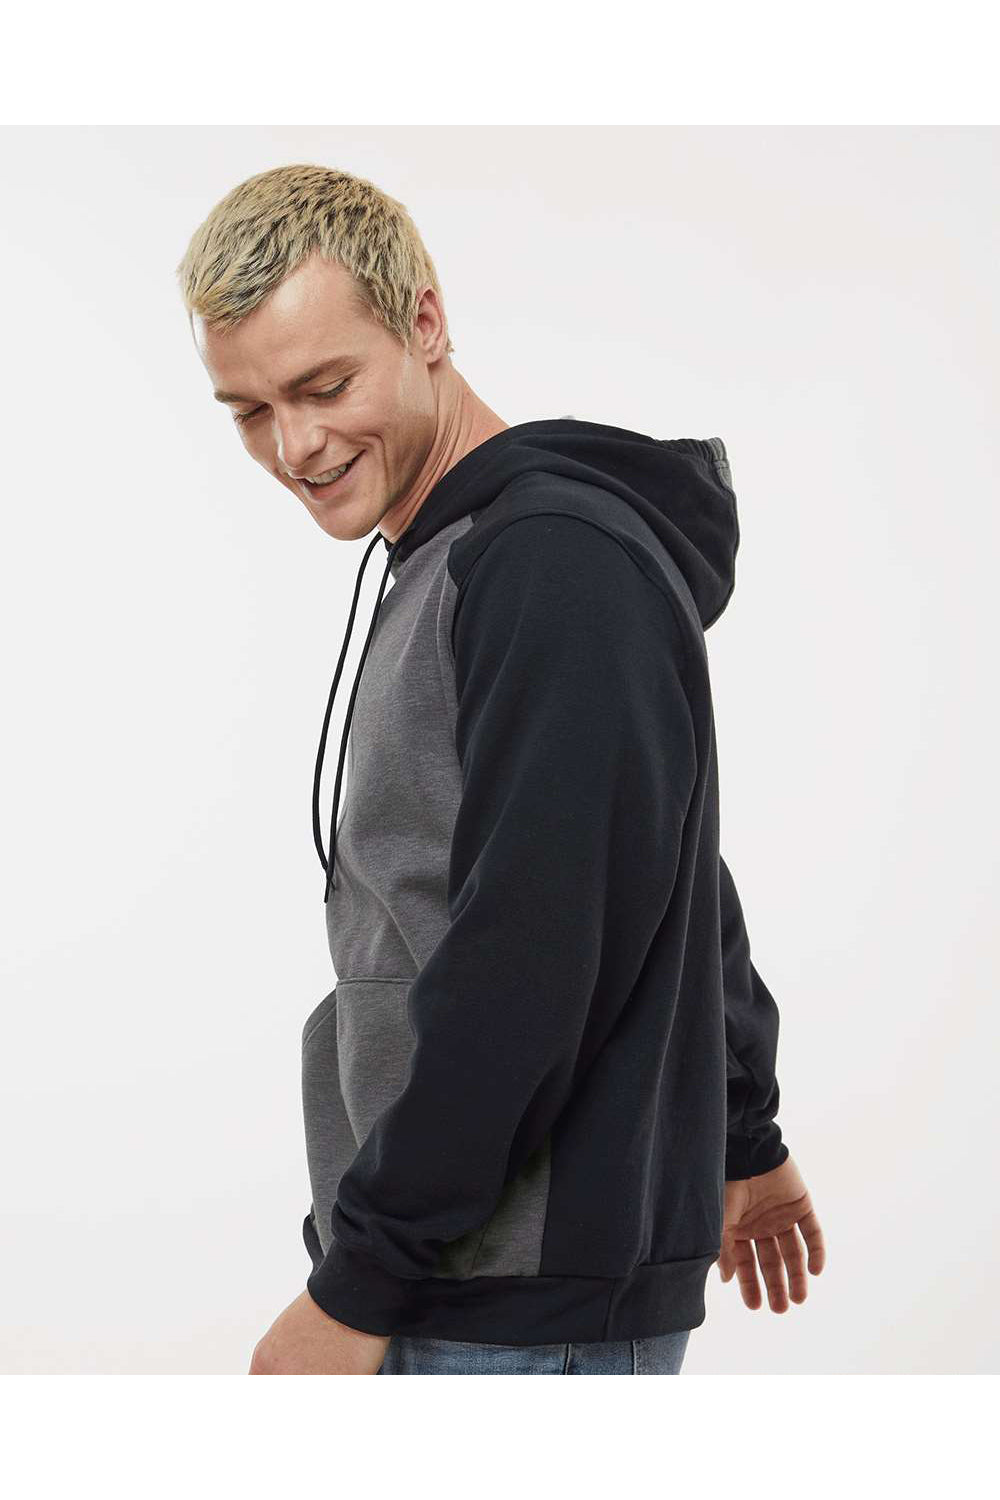 Augusta Sportswear 6865 Mens Eco Revive 3 Season Fleece Hooded Sweatshirt Hoodie Heather Carbon Grey/Black Model Side